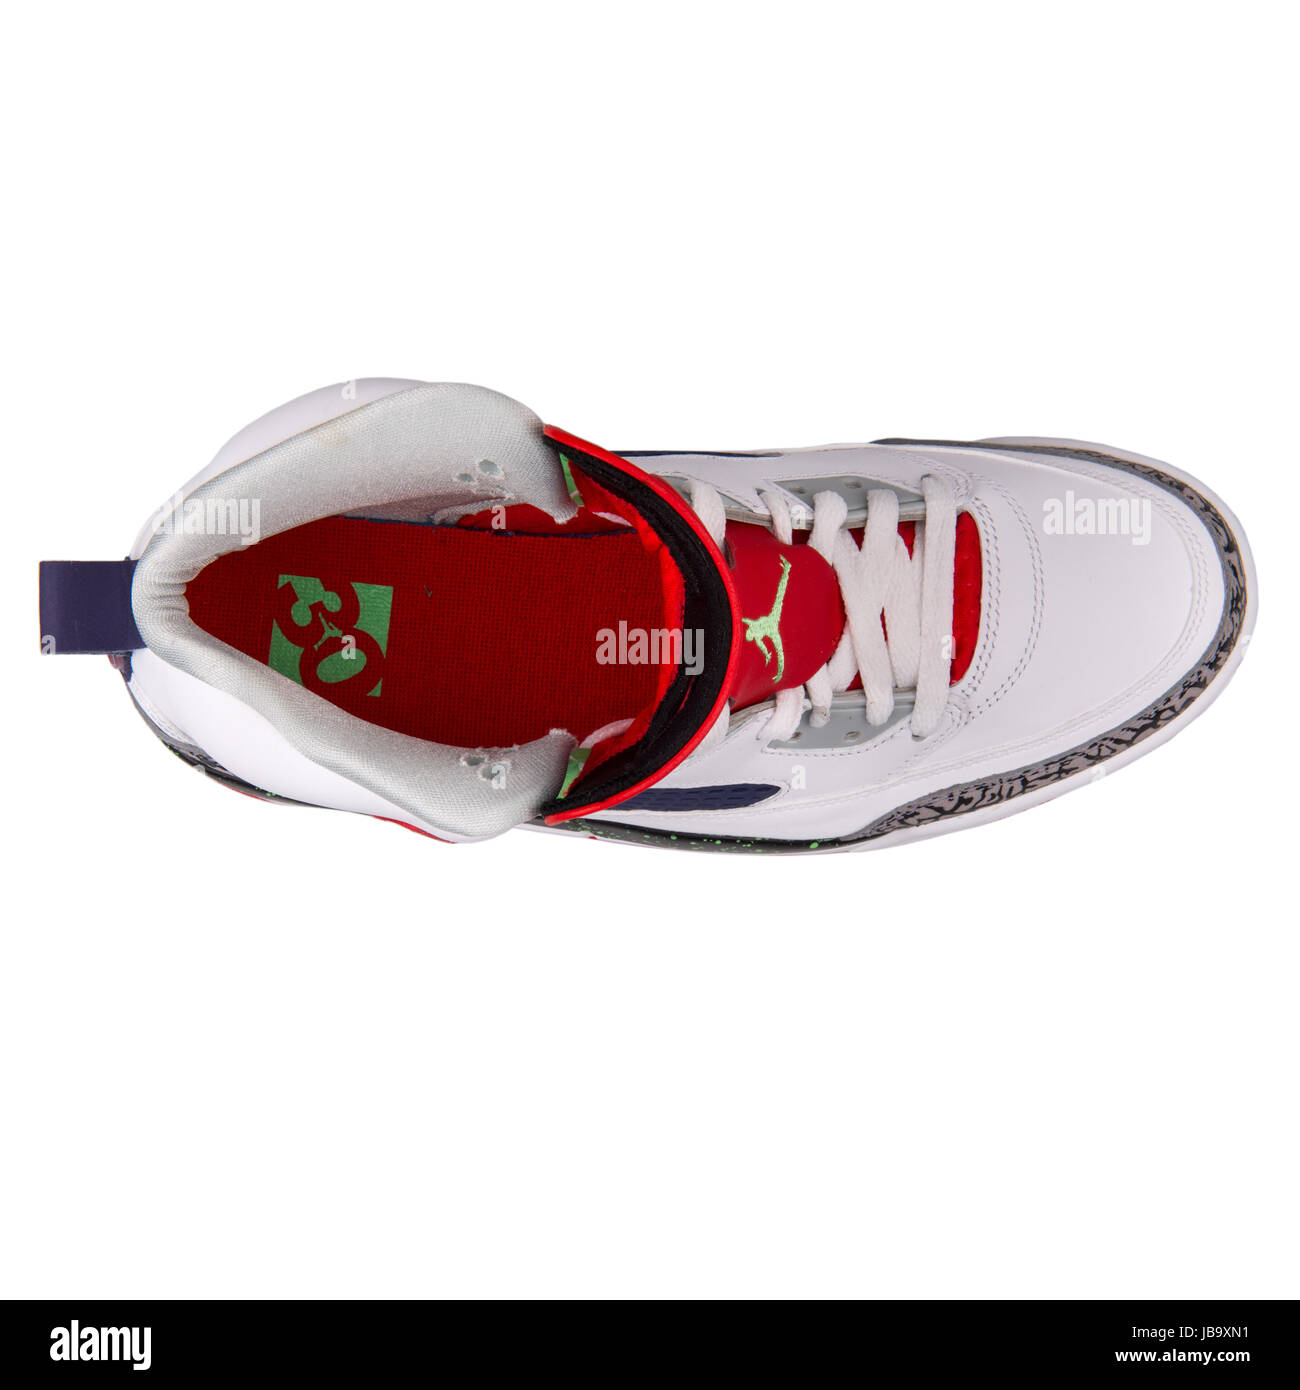 Nike Jordan Spizike Blanc, Noir, Rouge et Vert Fluo Chaussures de  basket-ball - 315371-132 Photo Stock - Alamy